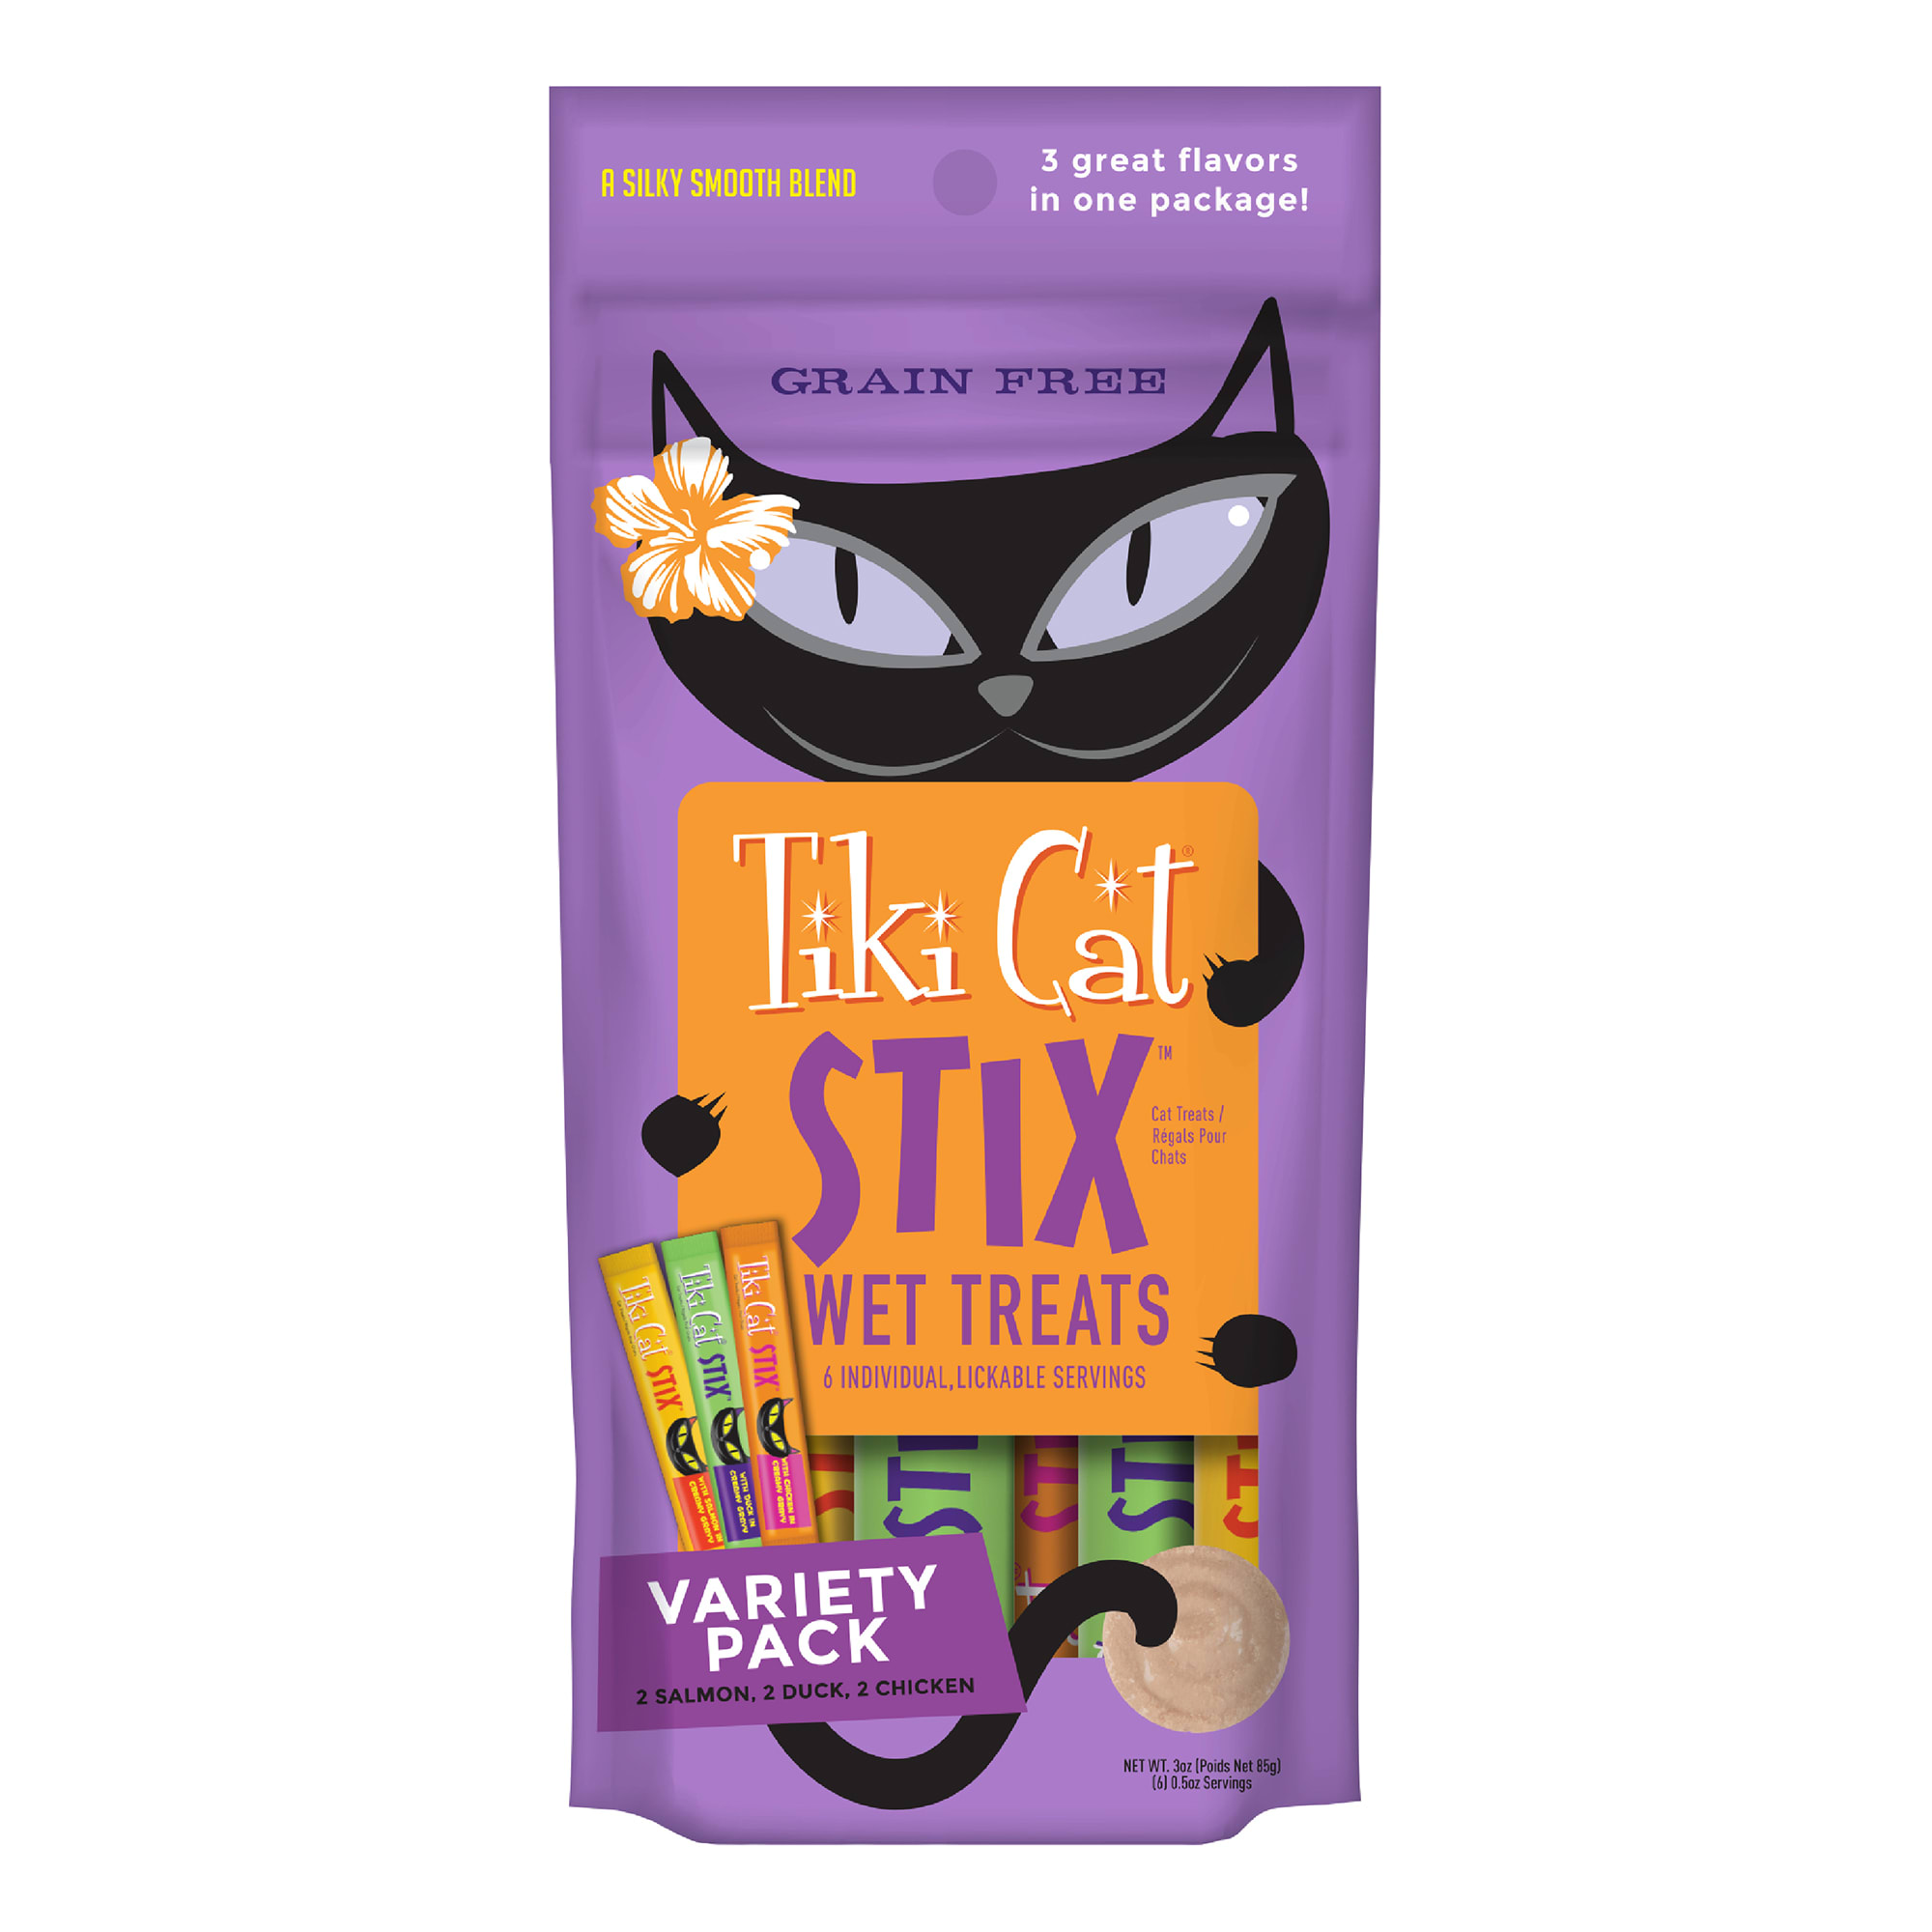 Tiki Cat Stix Treats Variety Pack, 0.5 oz., Count of 6